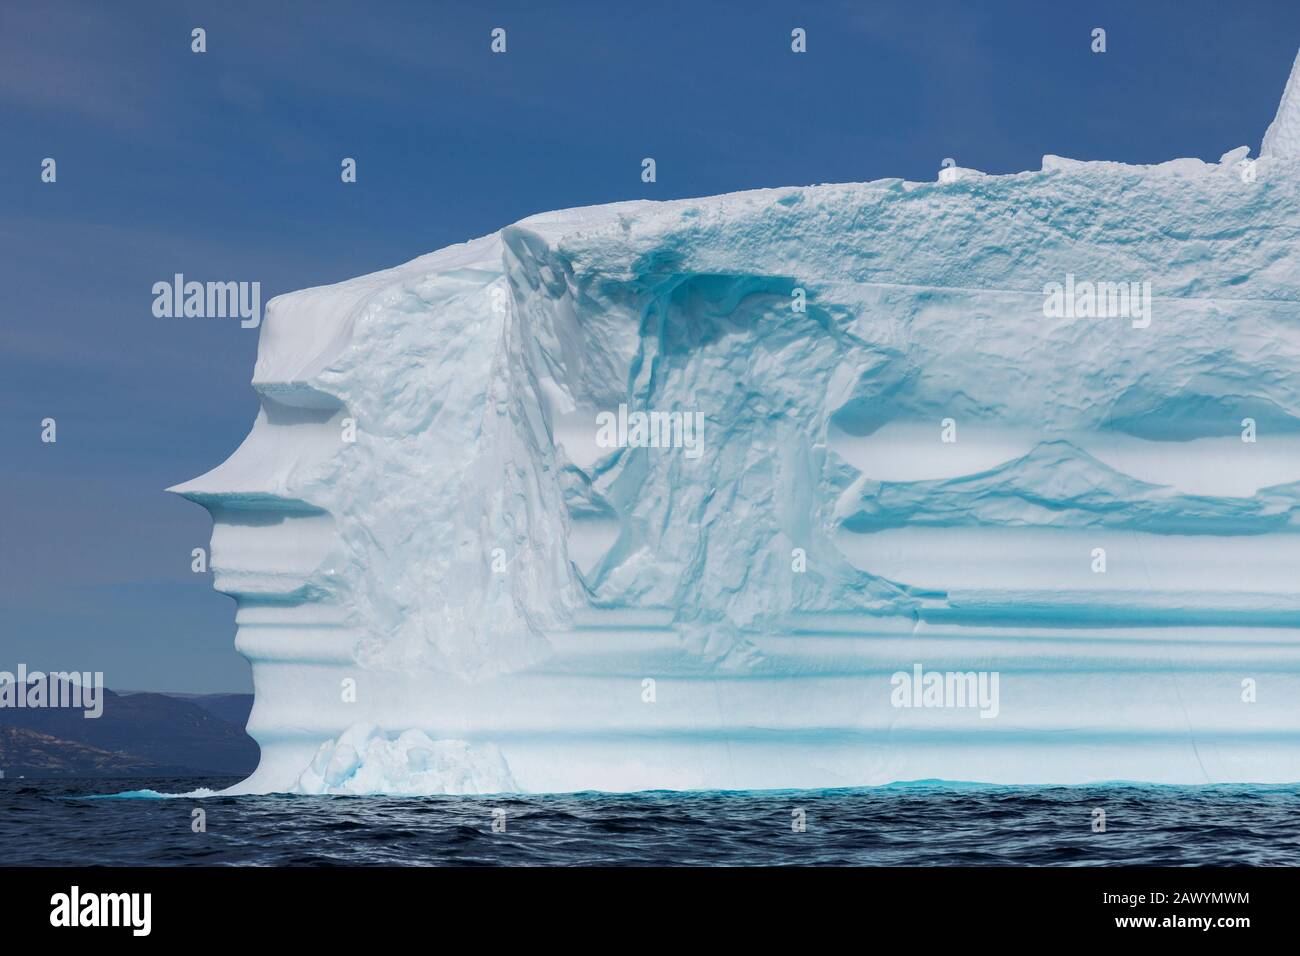 Majestueuse formation d'iceberg sur l'océan ensoleillé Groenland Banque D'Images